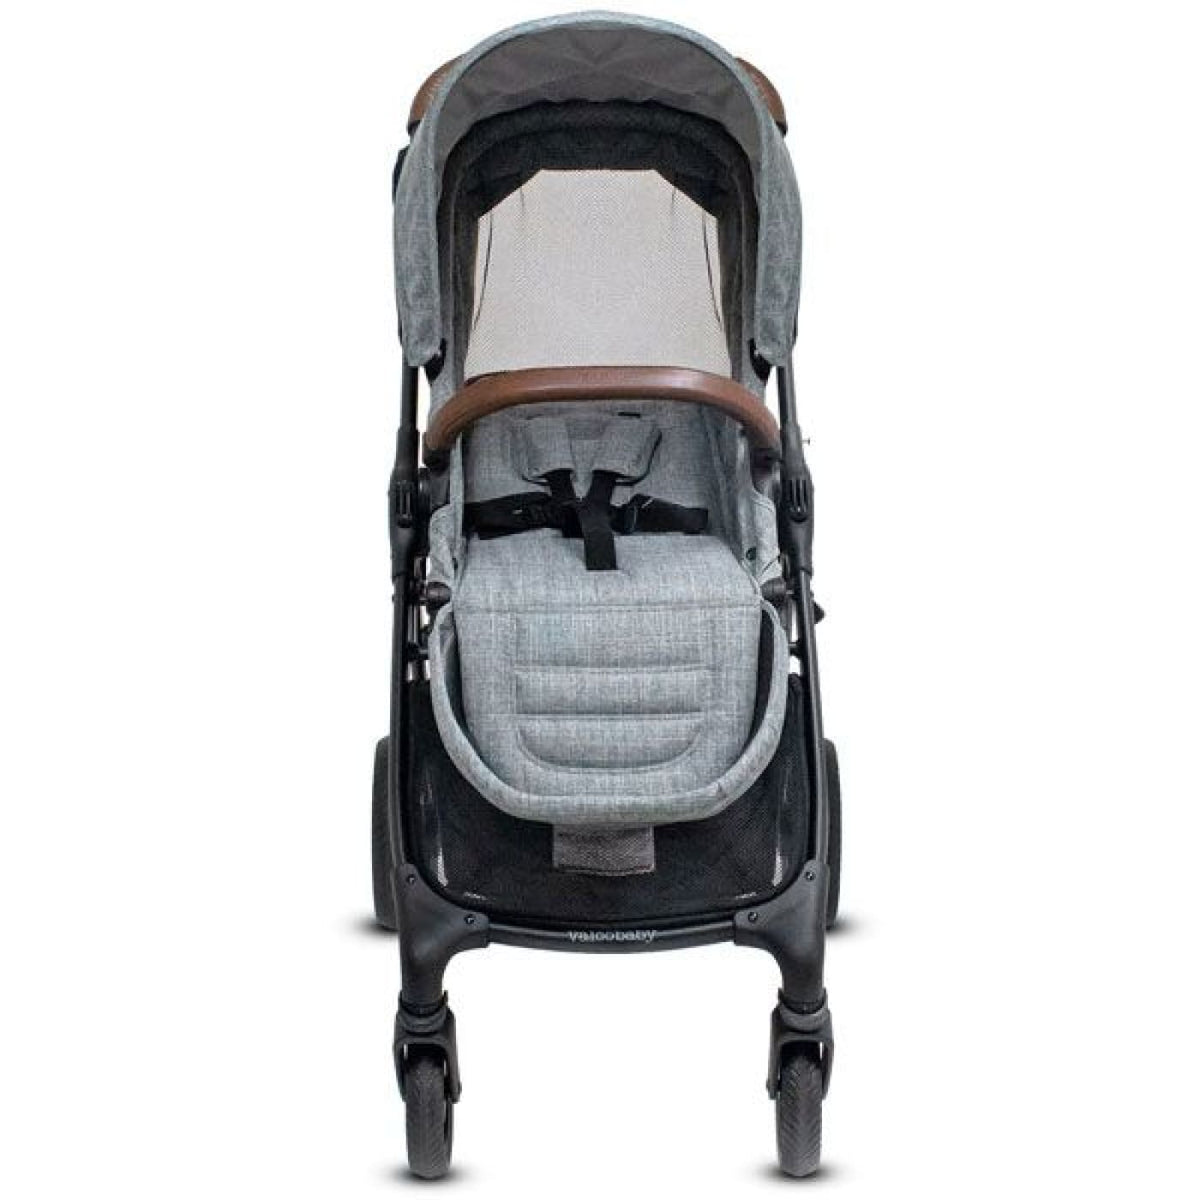 Valco Baby Trend Ultra Stroller - Grey Marle + BONUS Cup Holder - Grey Marle - PRAMS &amp; STROLLERS - 4 WHEEL TSC